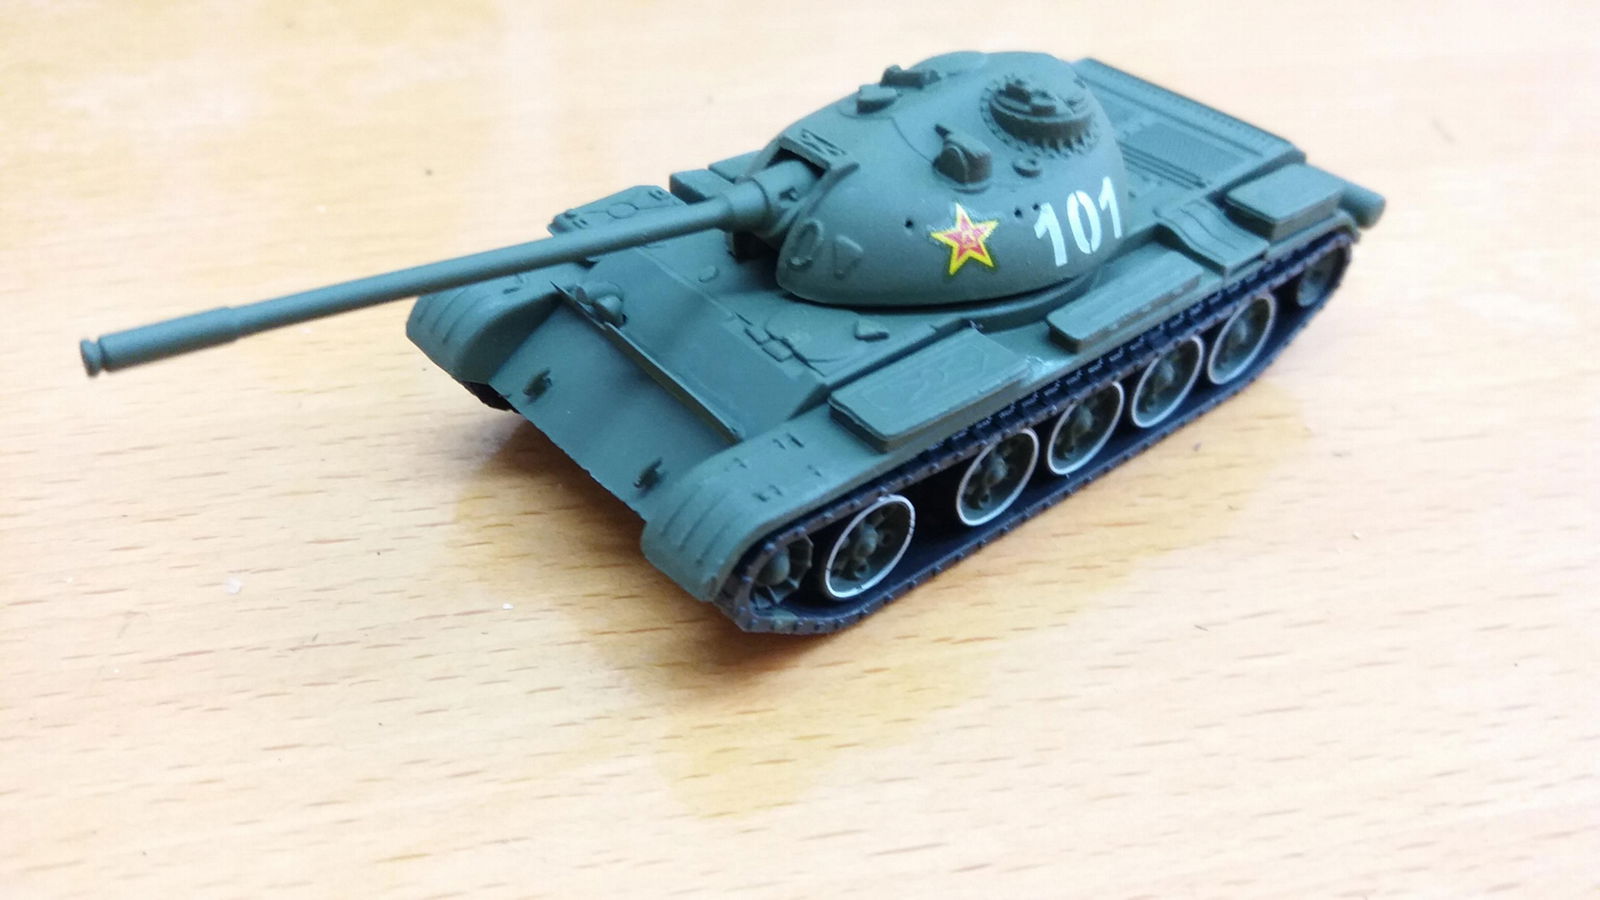 Tank precision model limited edition